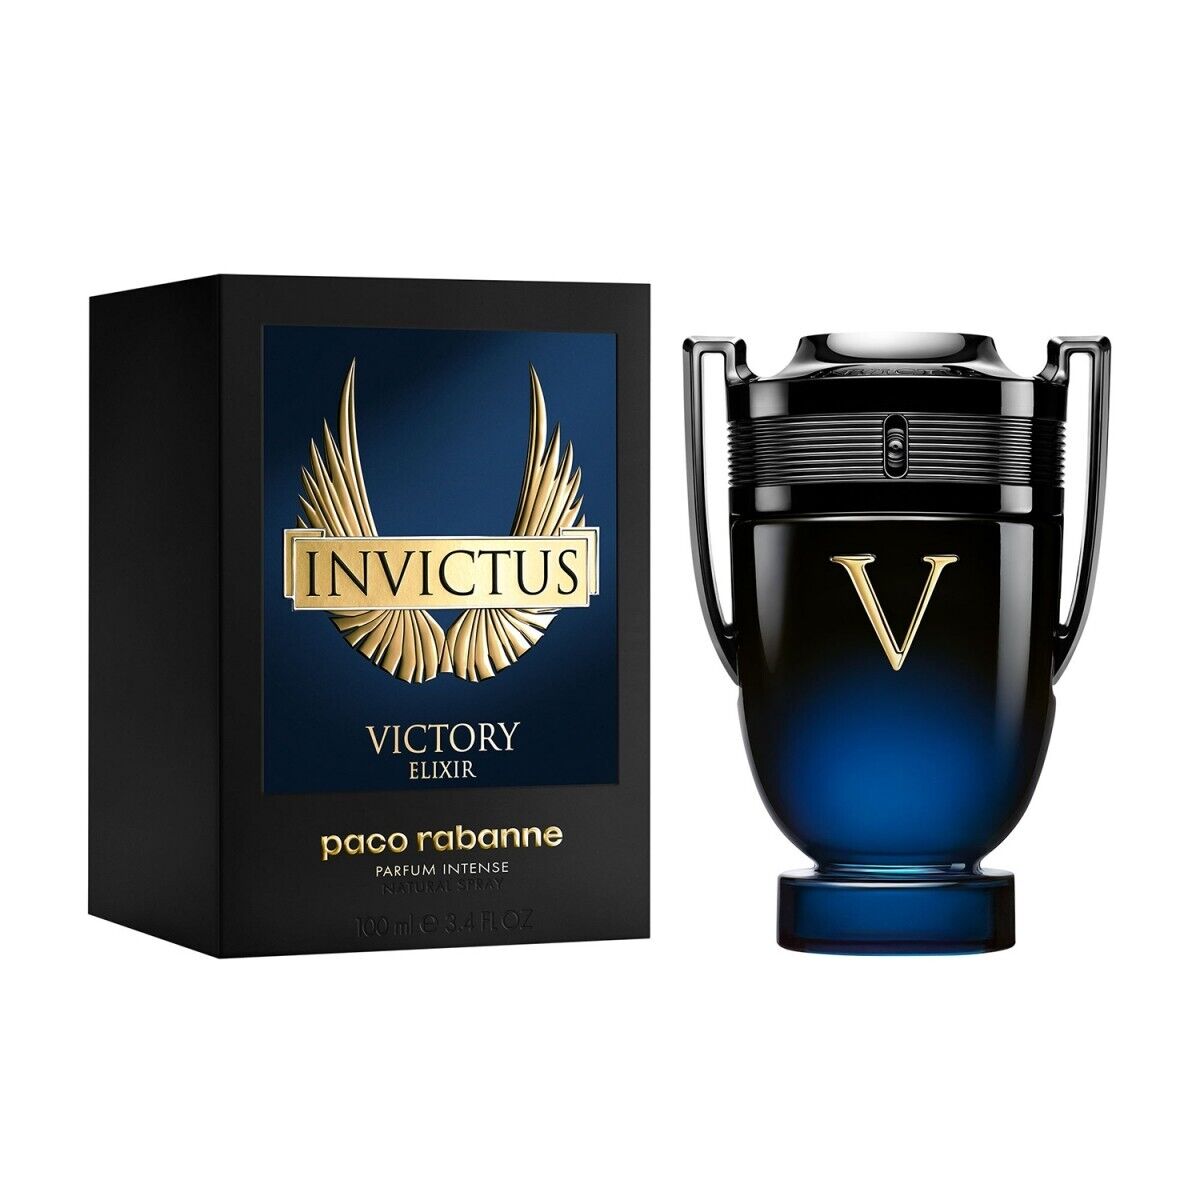 Paco Rabanne Invictus Victory Elixir 3.4 oz 100 ml Parfum Intense